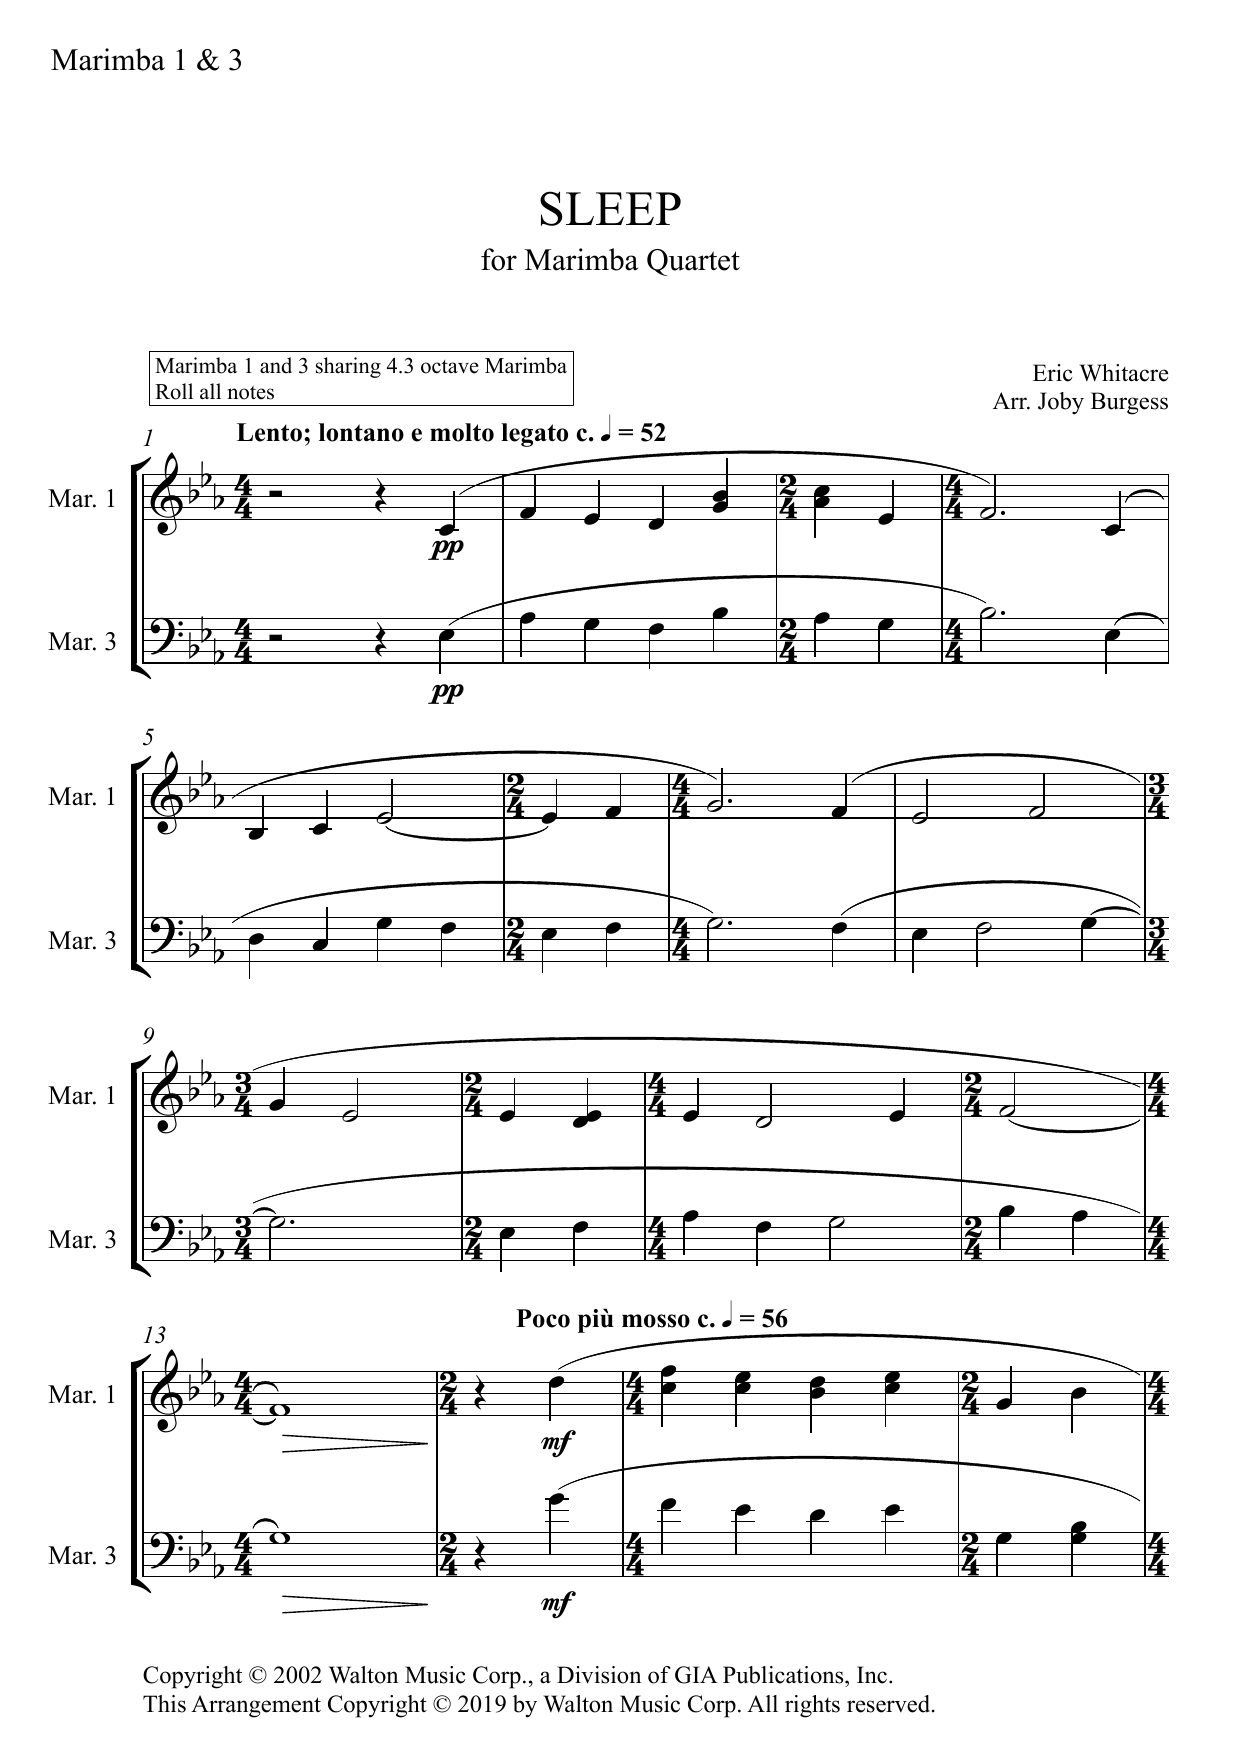 Sleep for Marimba Quartet (arr. Joby Burgess) - MARIMBA 1 & 3 (Percussion Ensemble) von Eric Whitacre